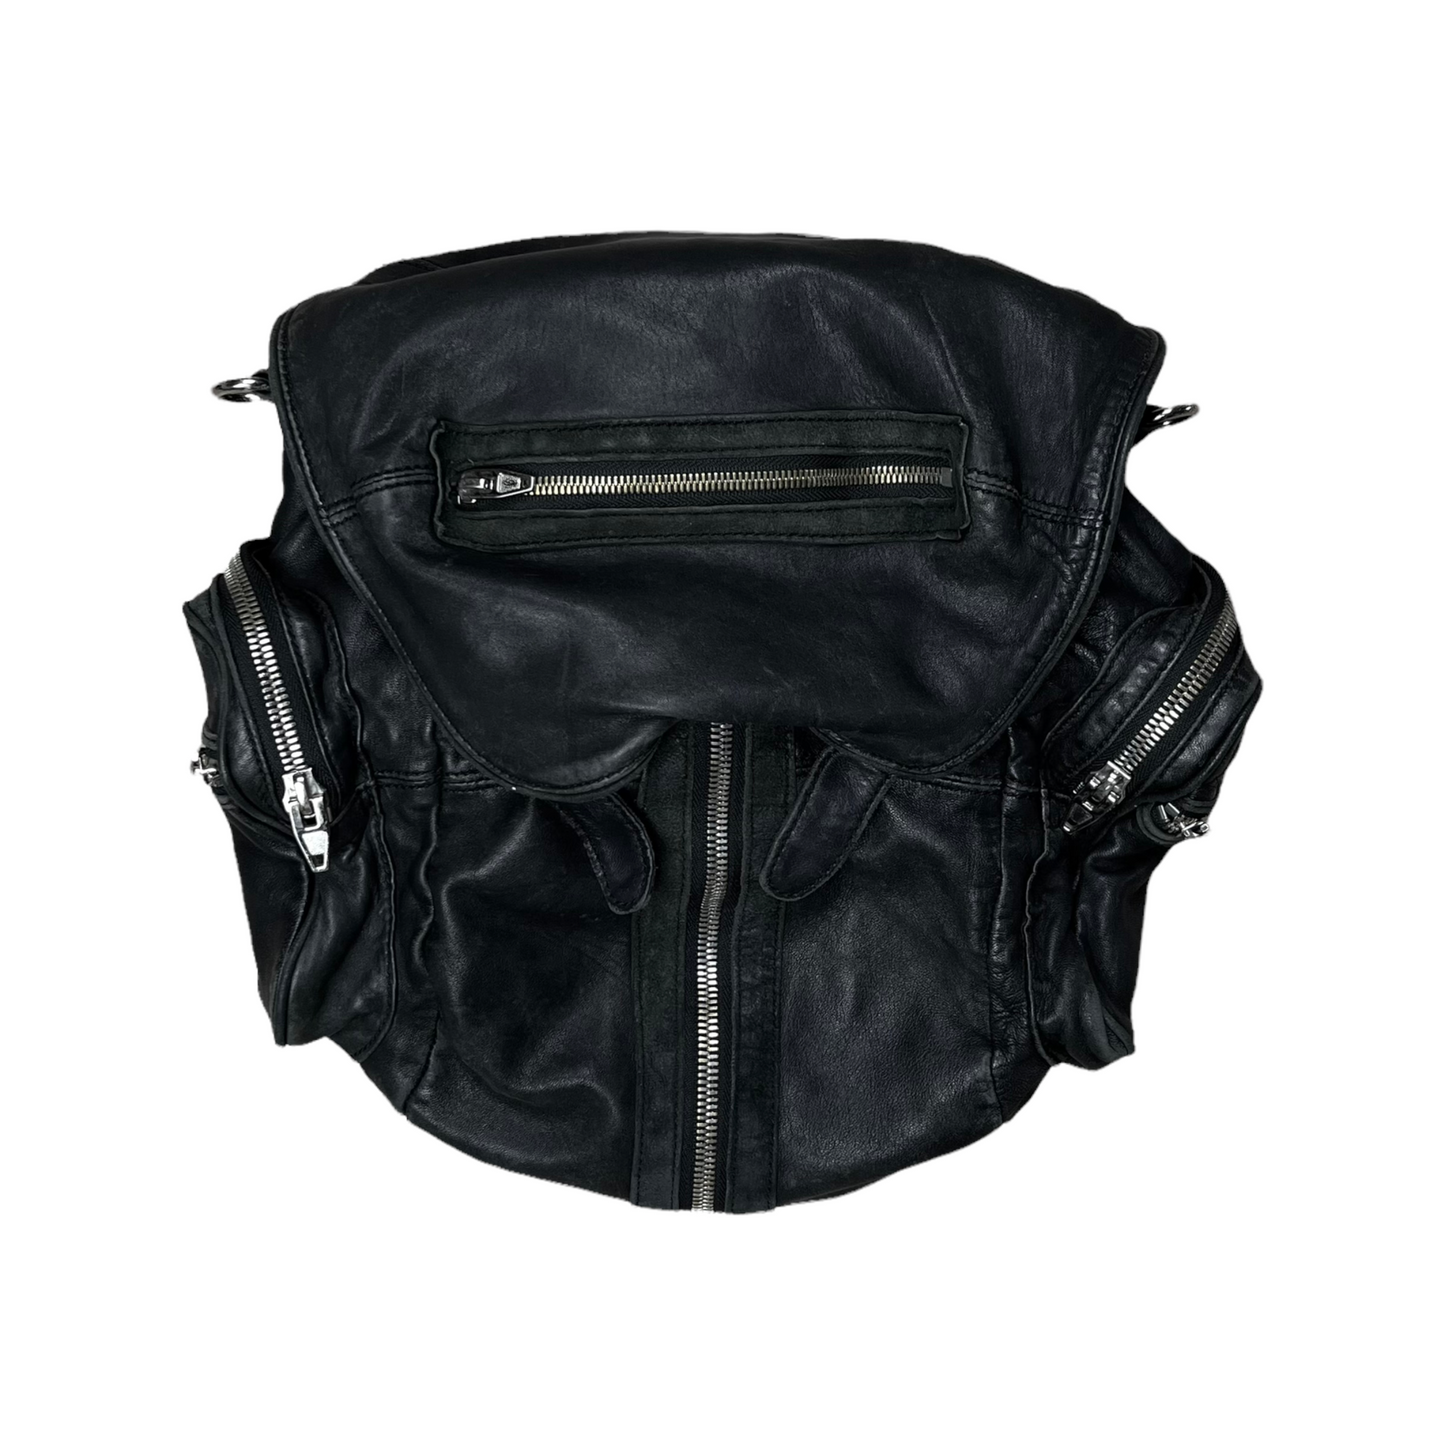 Alexander Wang Leather Hybrid Zip Bag